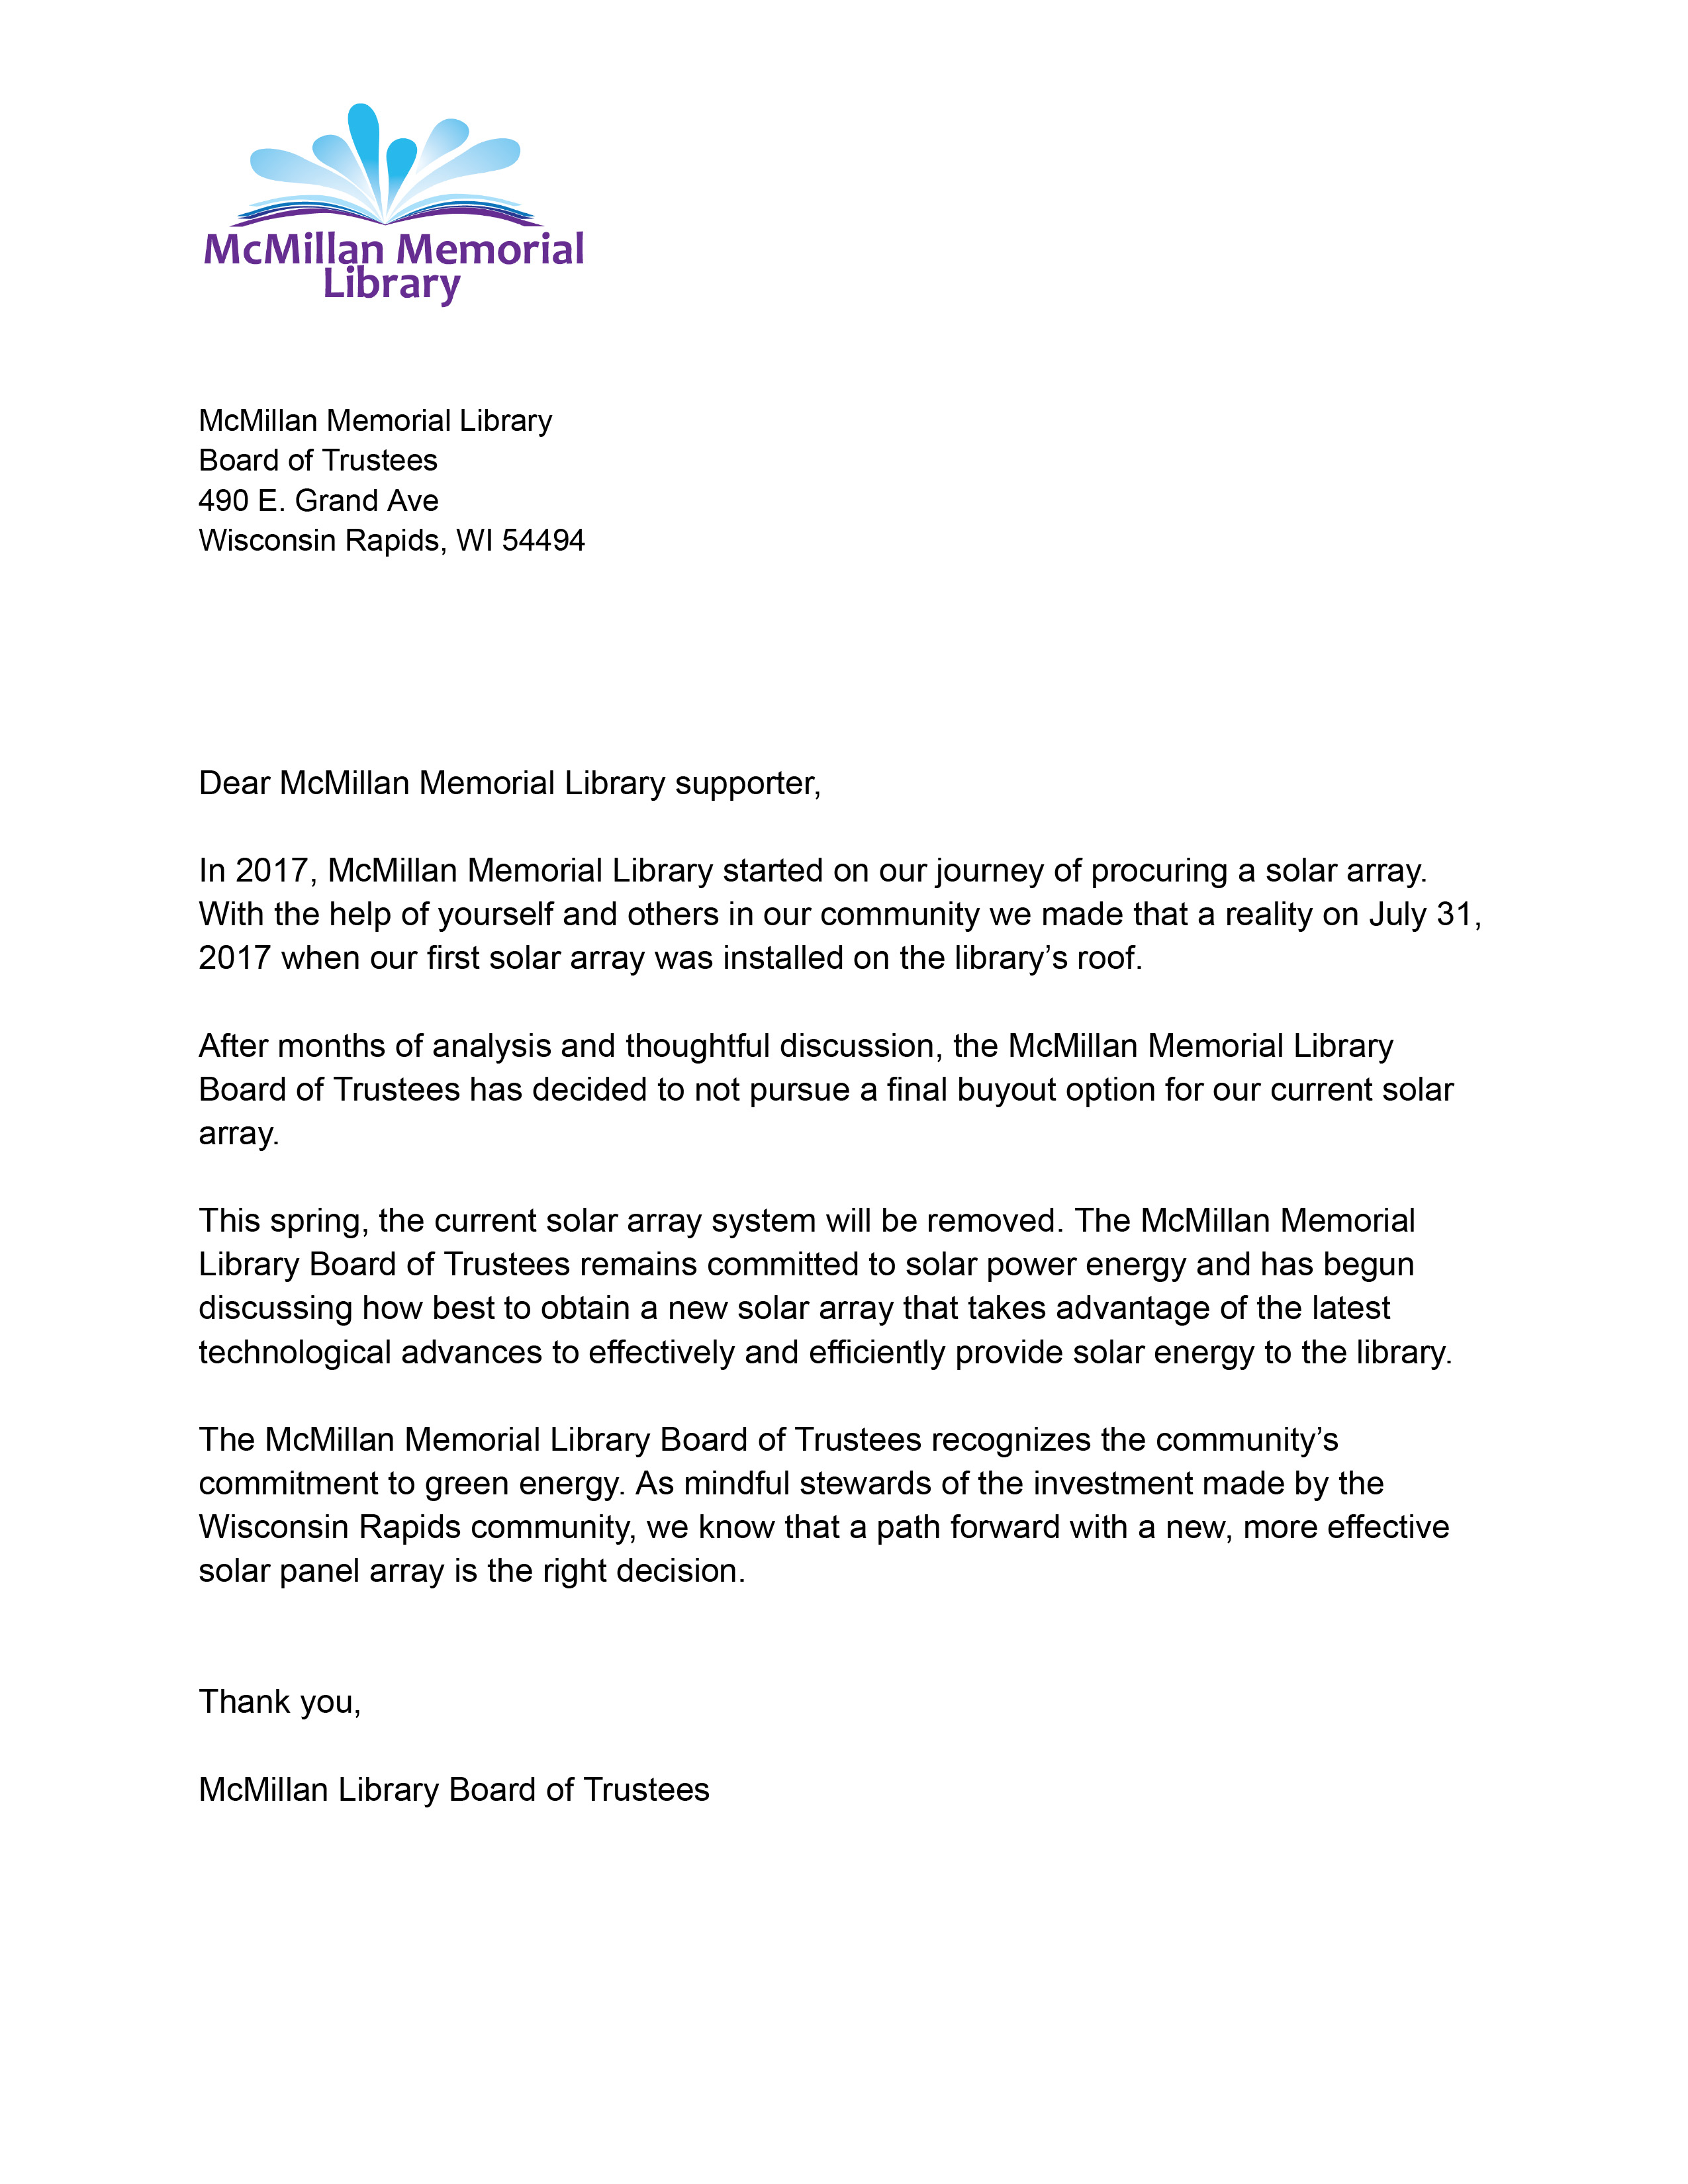 McMillan Library Board Solar Array Update Letter